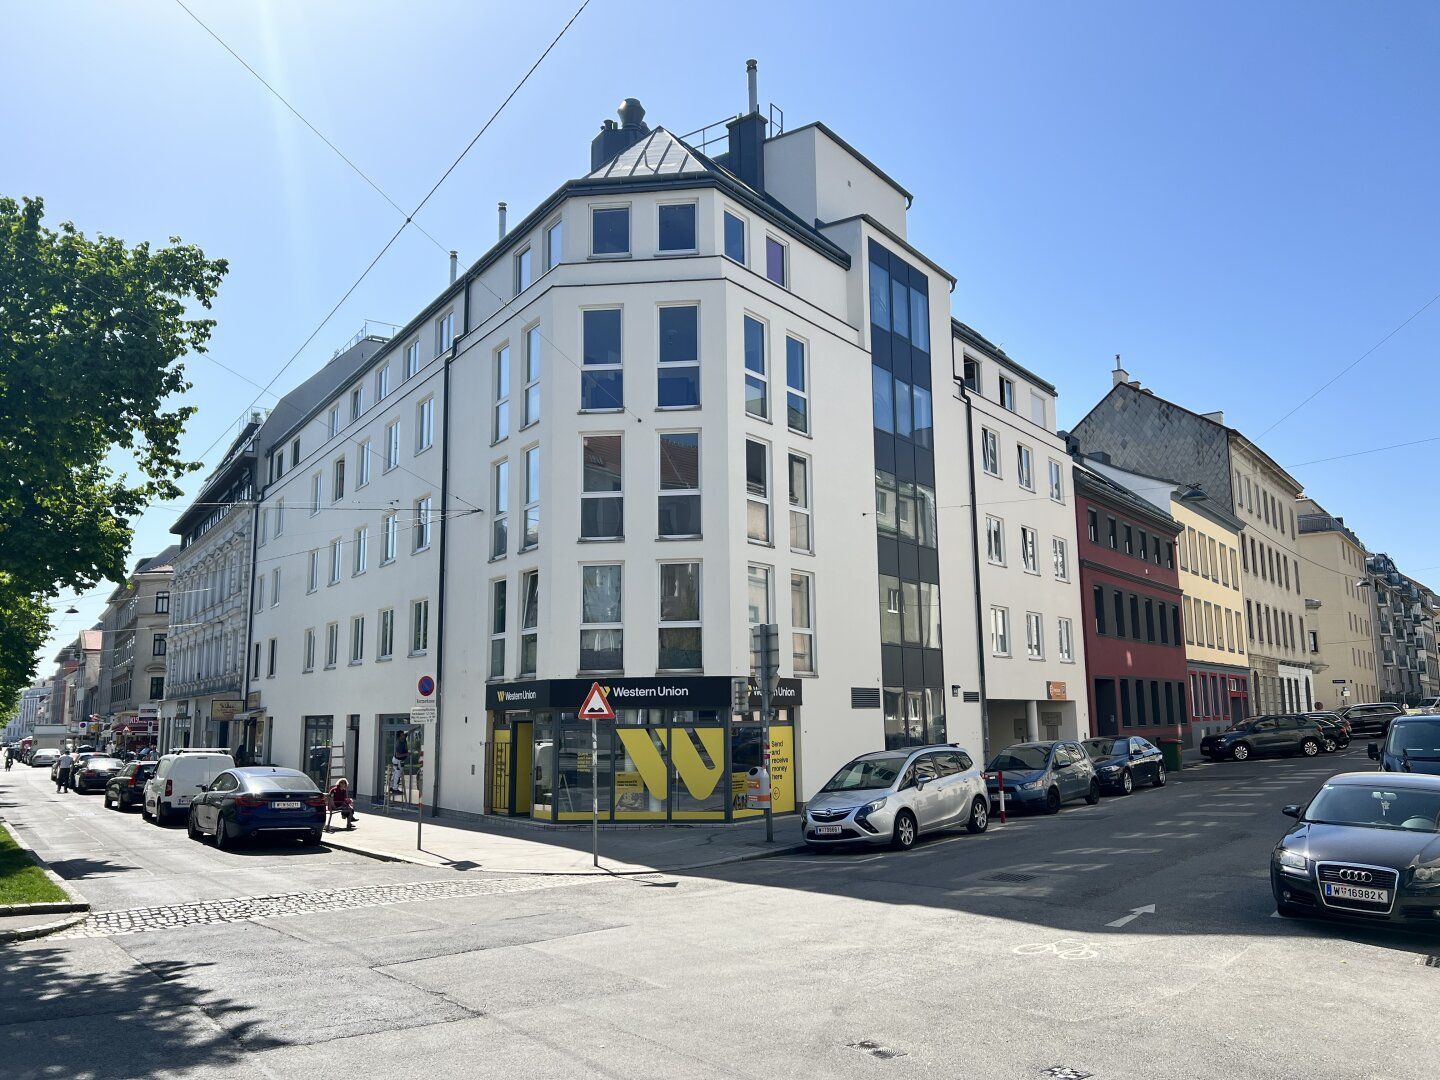 CHARMANTE Wohnung in Hernals: Dachgeschoss-Komfort auf 45m² zu mieten!